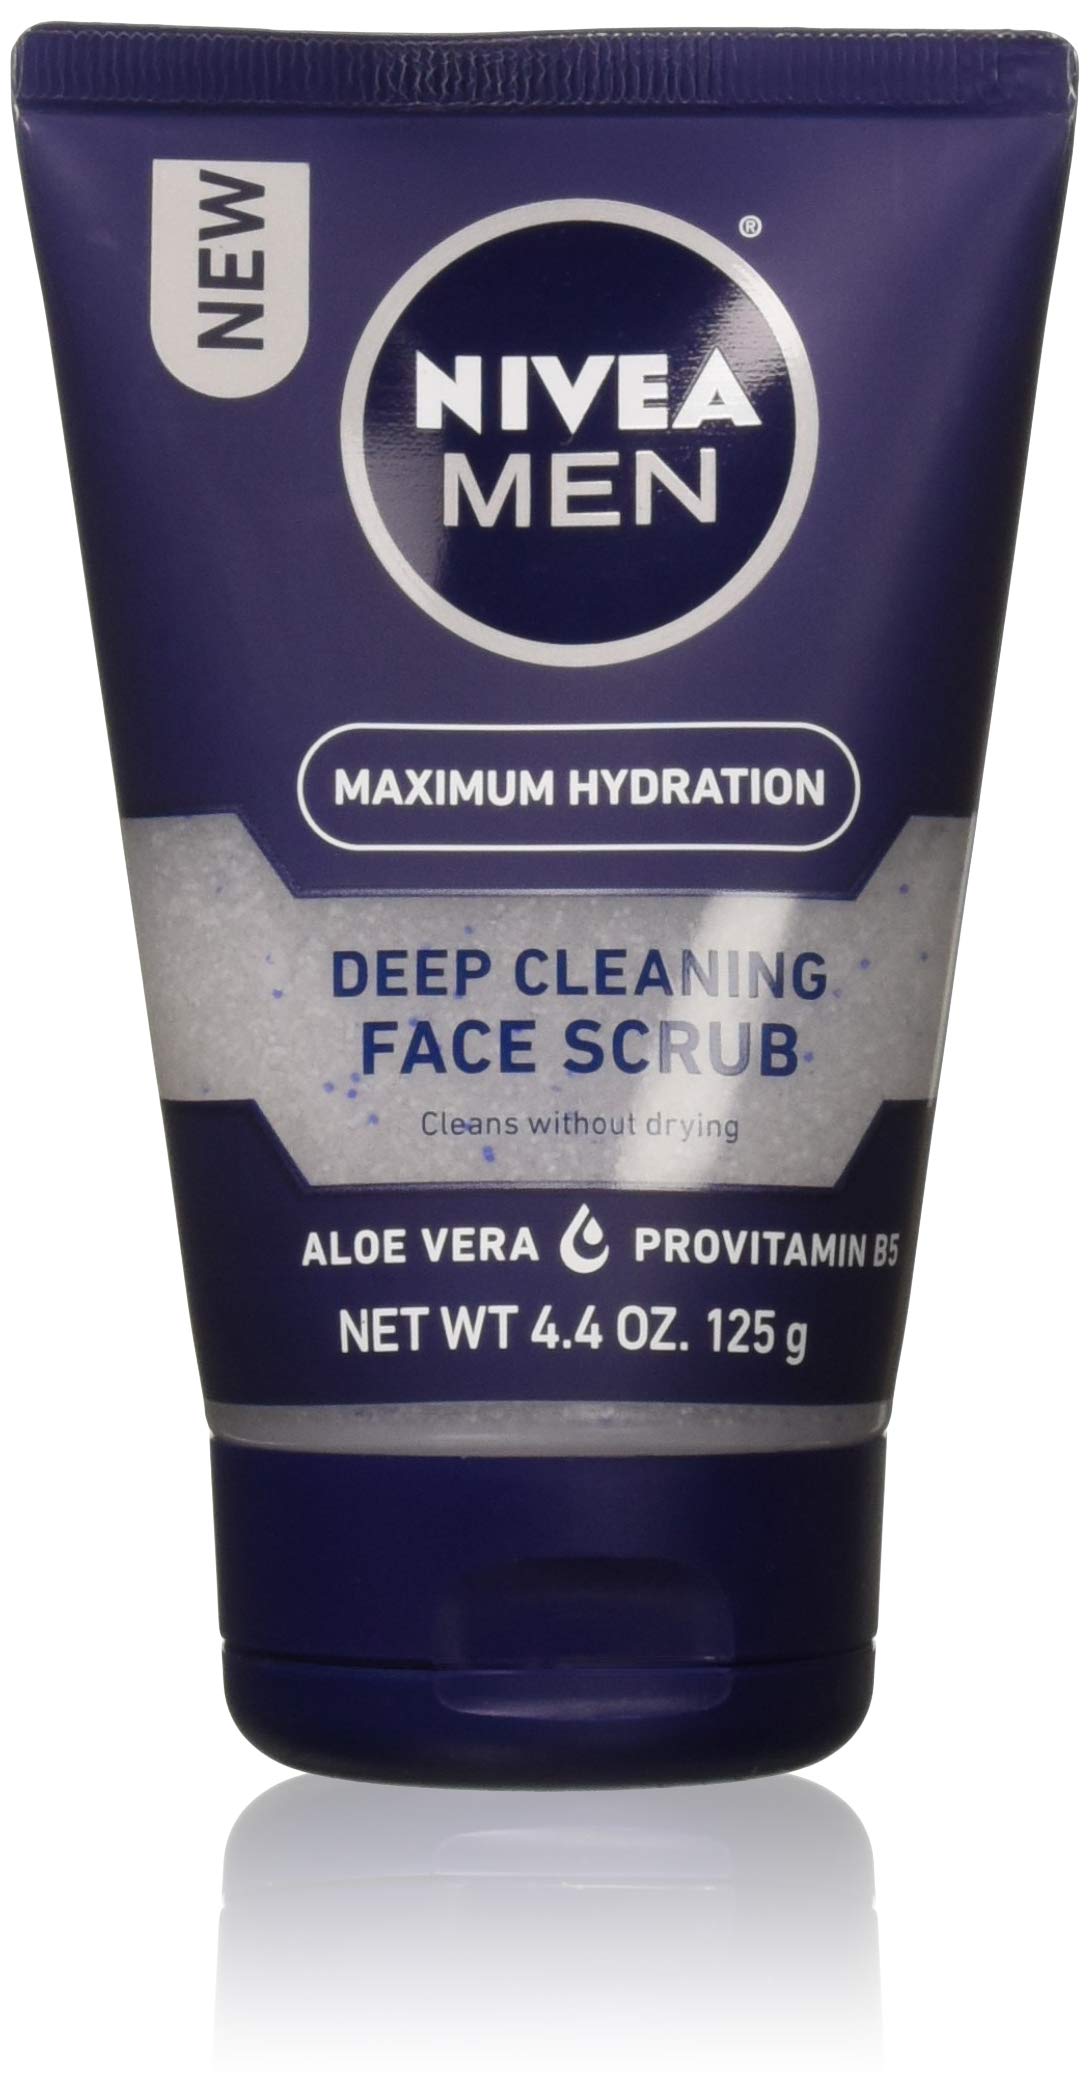 NIVEA FOR MEN Original, Deep Cleaning Face Scrub 4.4 oz (Pack of 2)